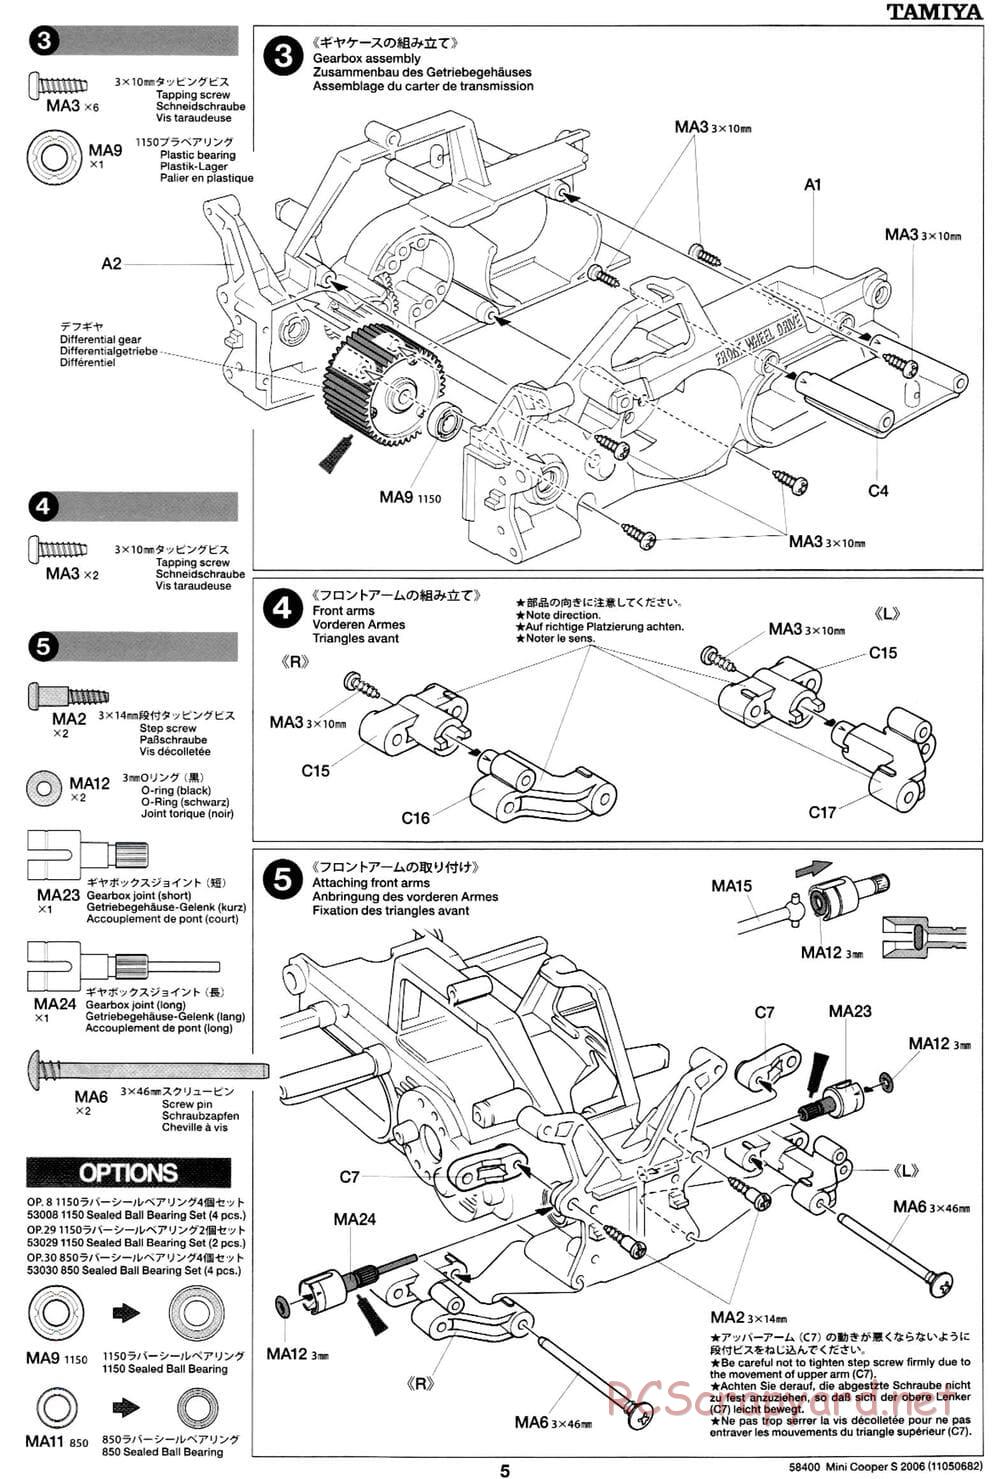 Tamiya - Mini Cooper S 2006 - M03L Chassis - Manual - Page 5